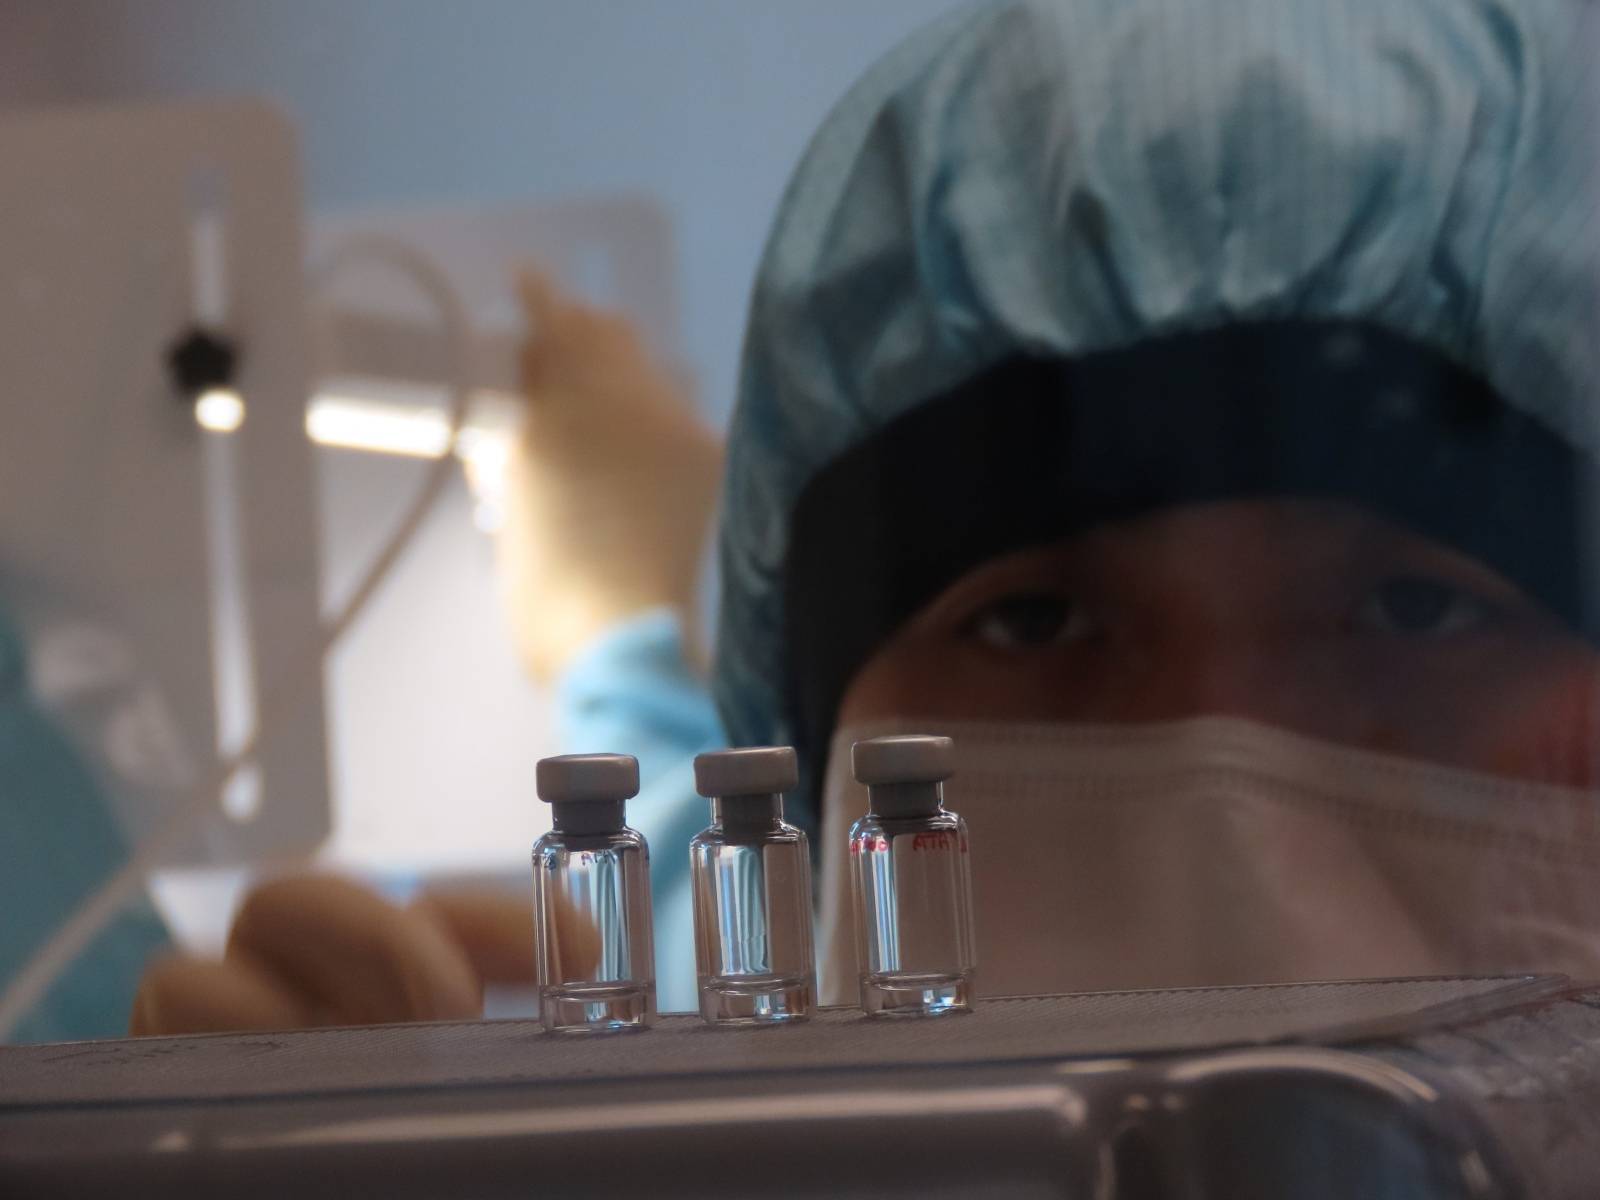 A scientist checks quality control of vaccine vials for correct volume at the Clinical Biomanufacturing Facility (CBF) in Oxford